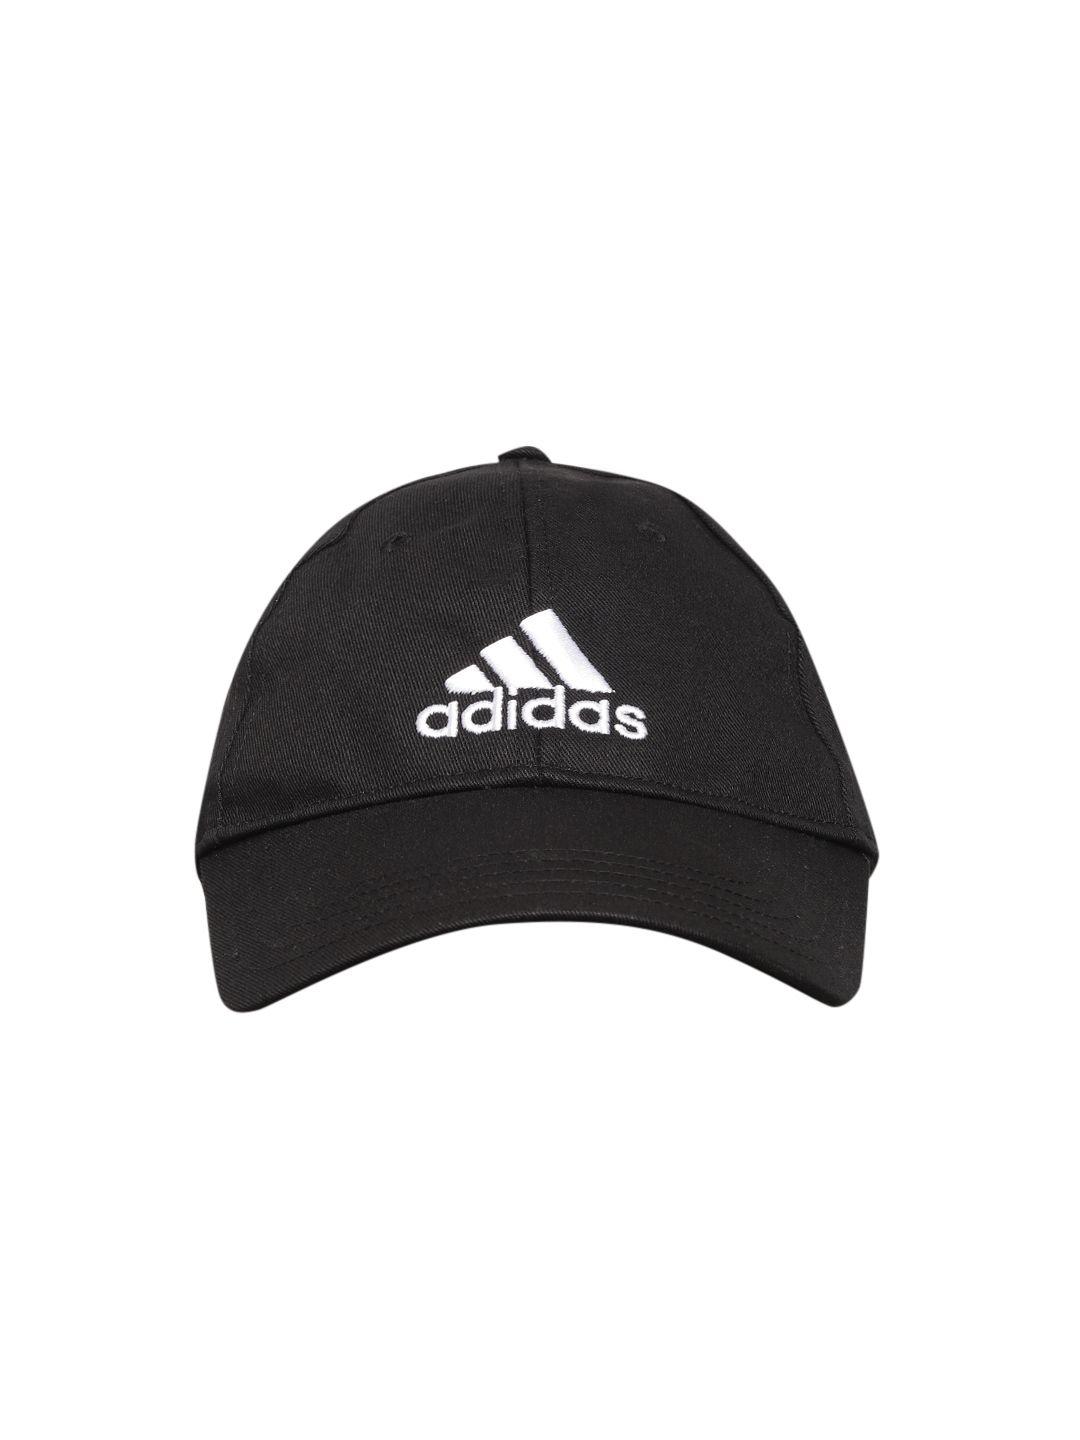 adidas-men-black-&-white-baseball-cap-with-brand-logo